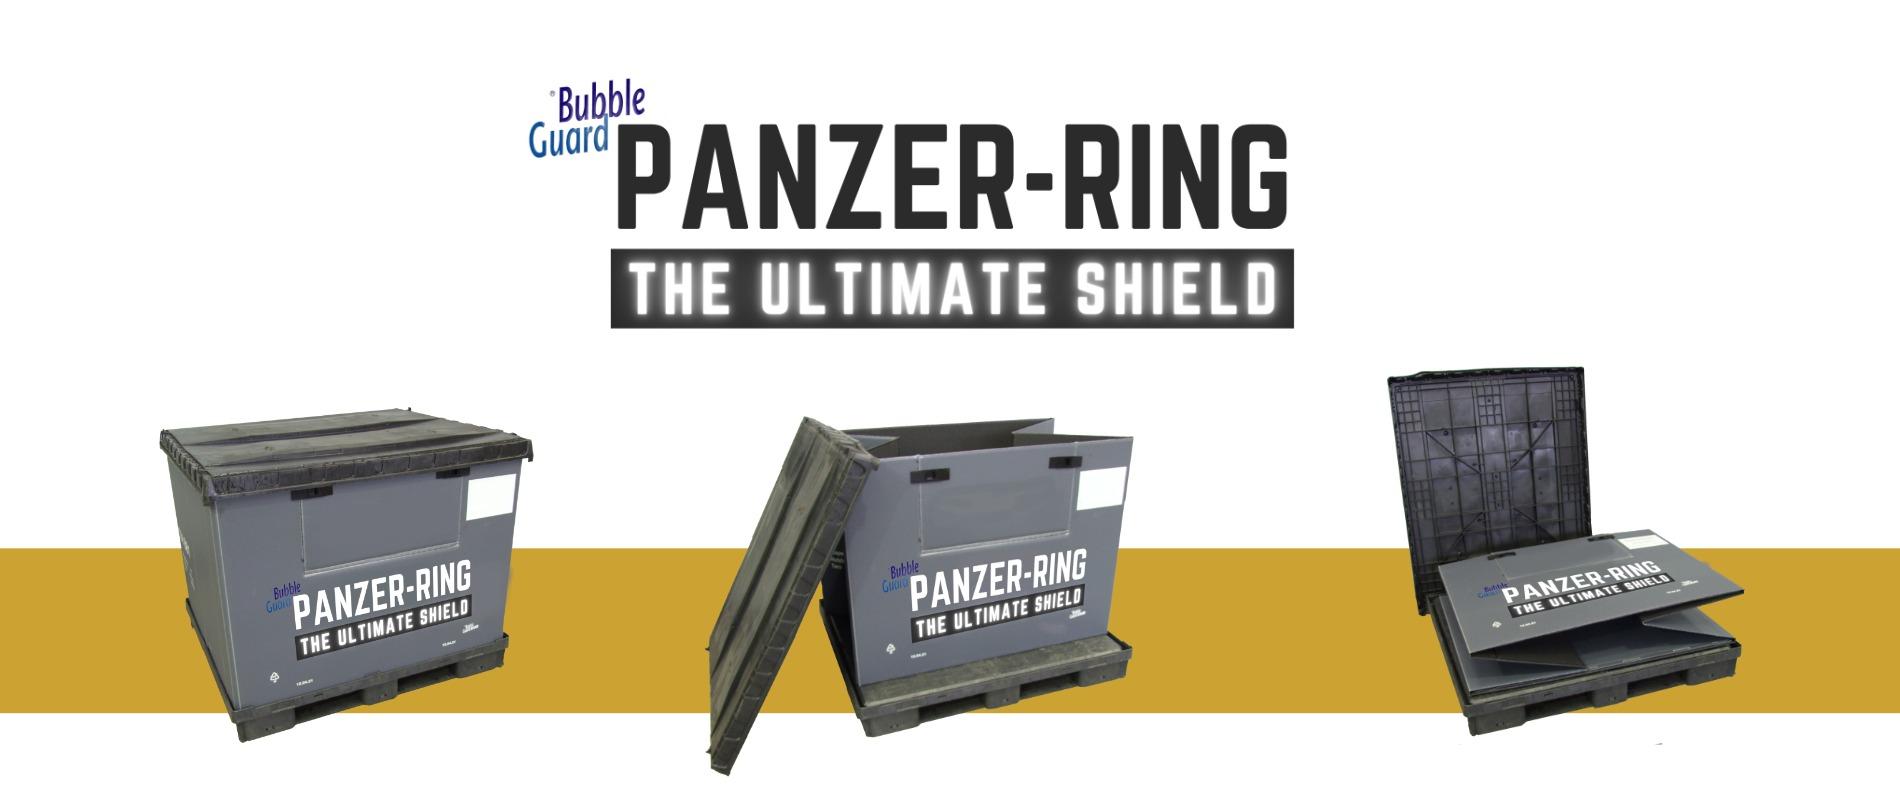 Bubble Guard Panzer-Ring